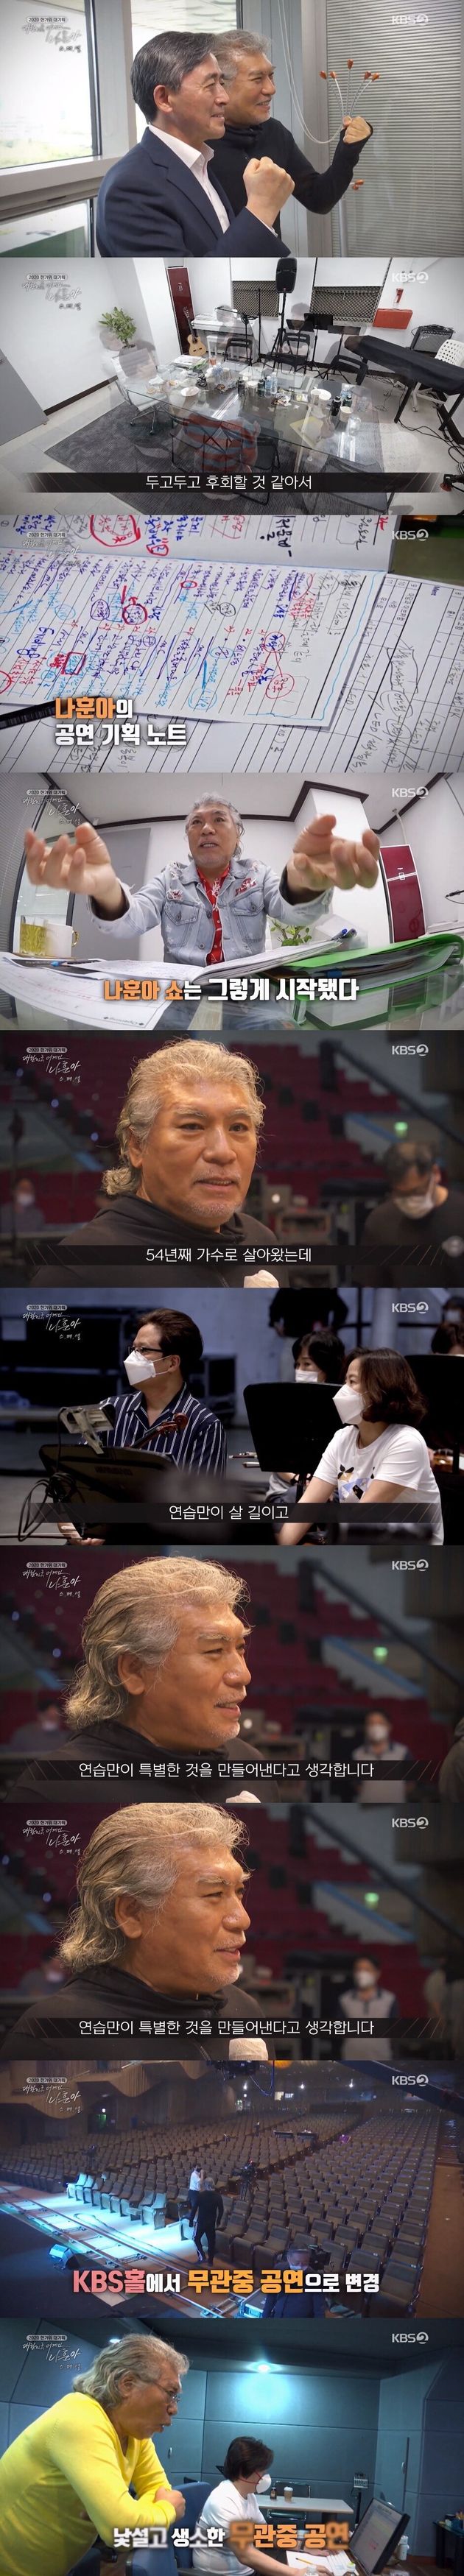 KBS 2TV '나훈아 스페셜'